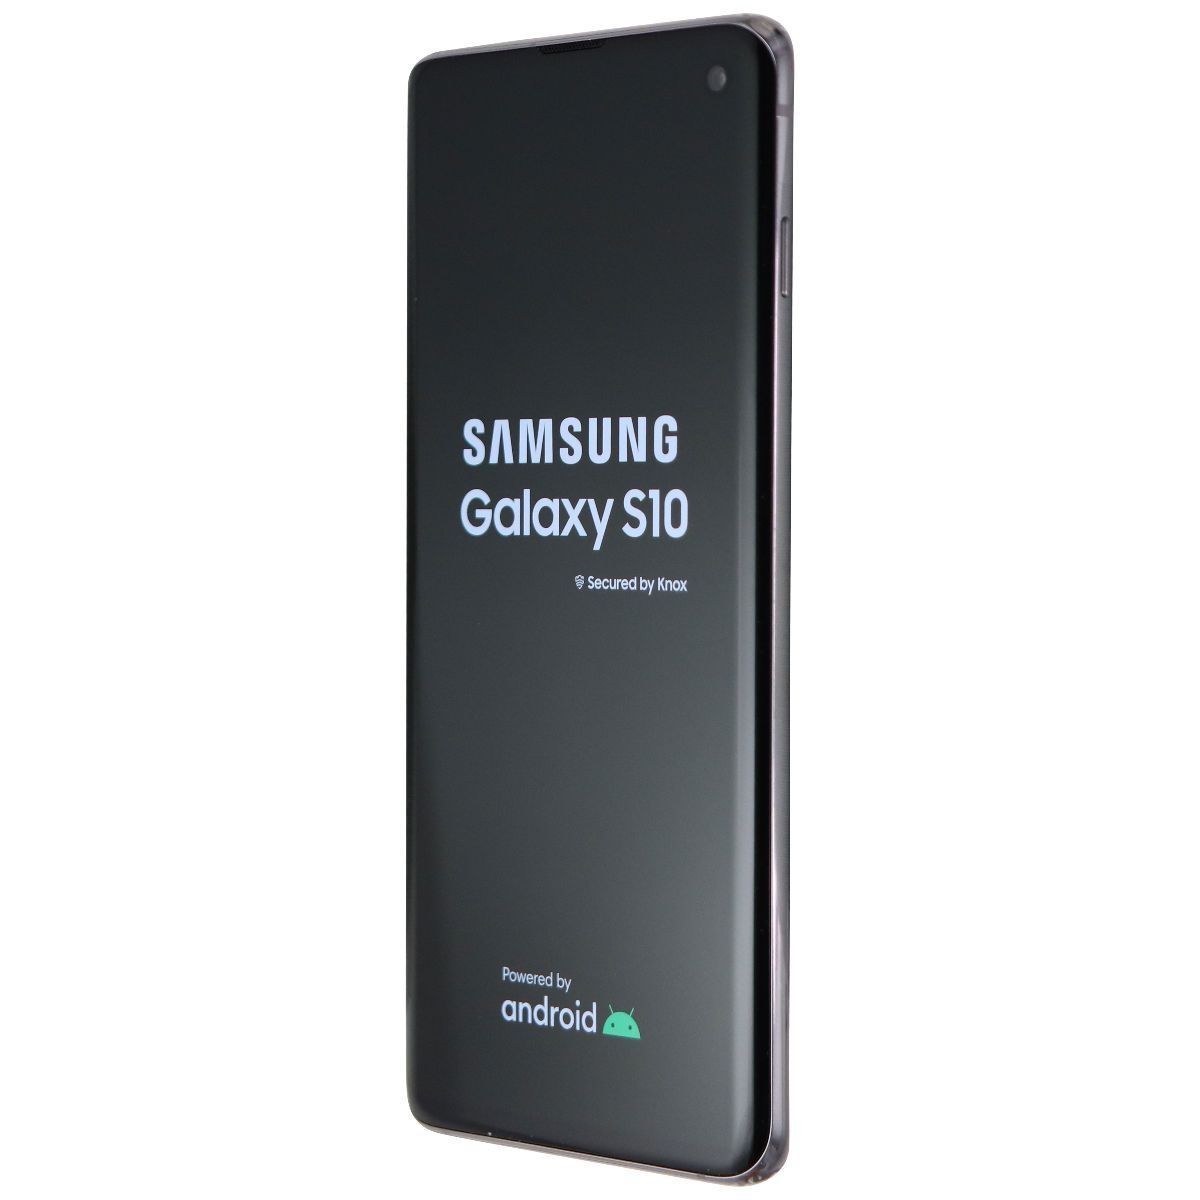 Samsung Galaxy S10 (6.1-inch) Smartphone SM-G973U (T-Mobile) - 128GB/Prism Black